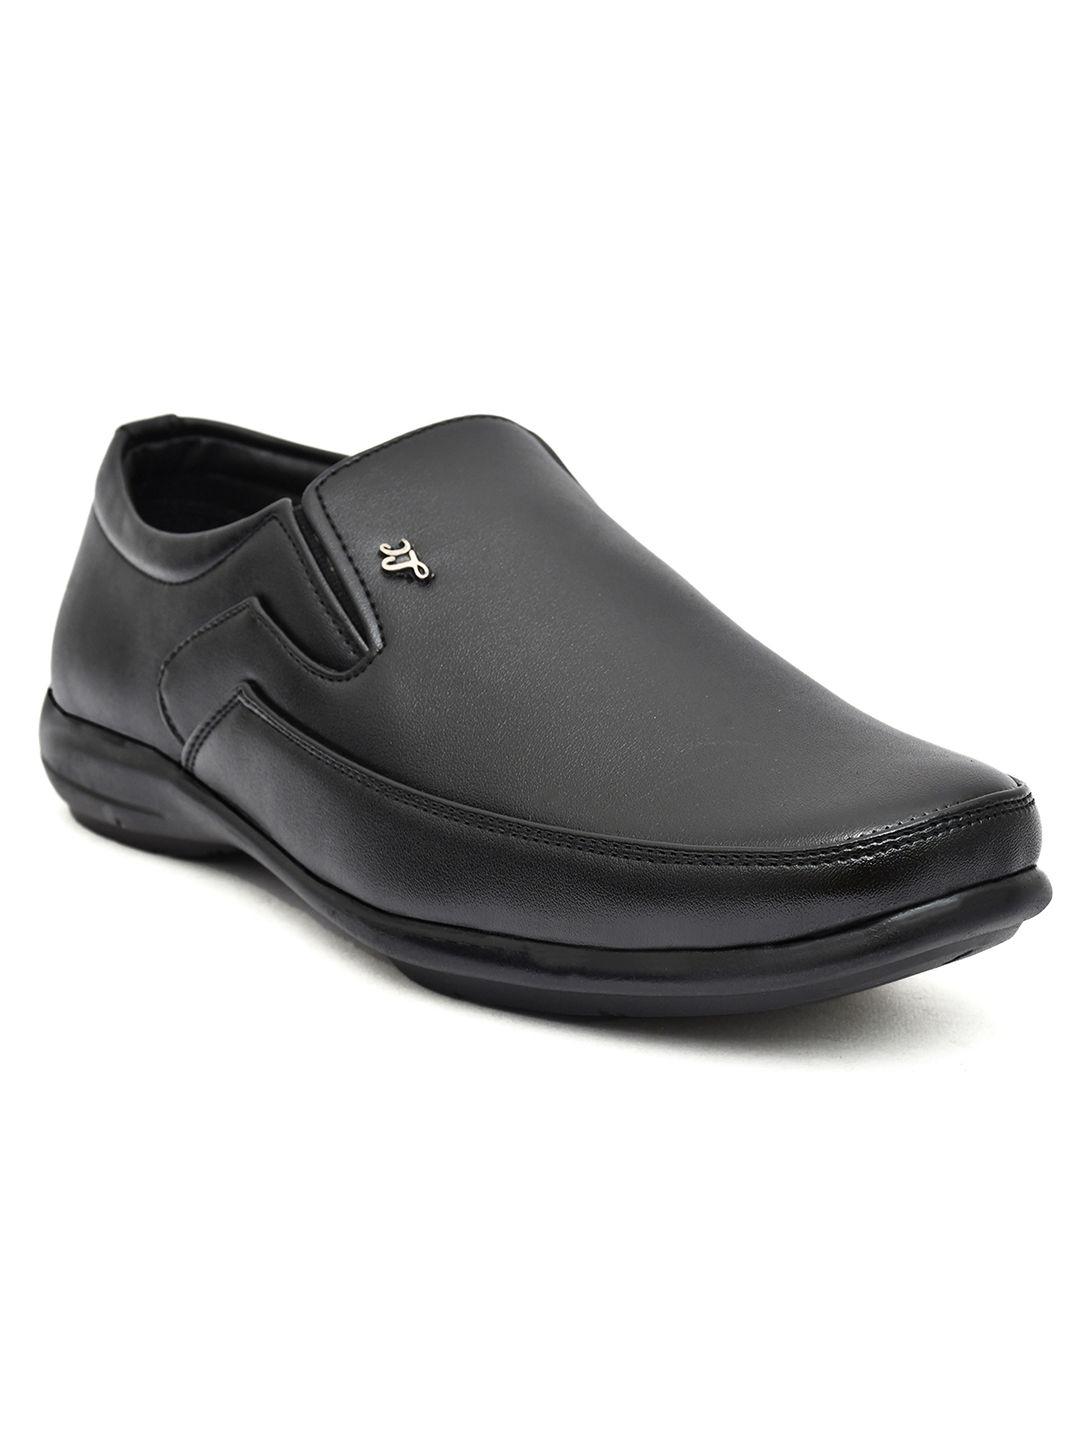 imcolus men round toe formal slip-on shoes